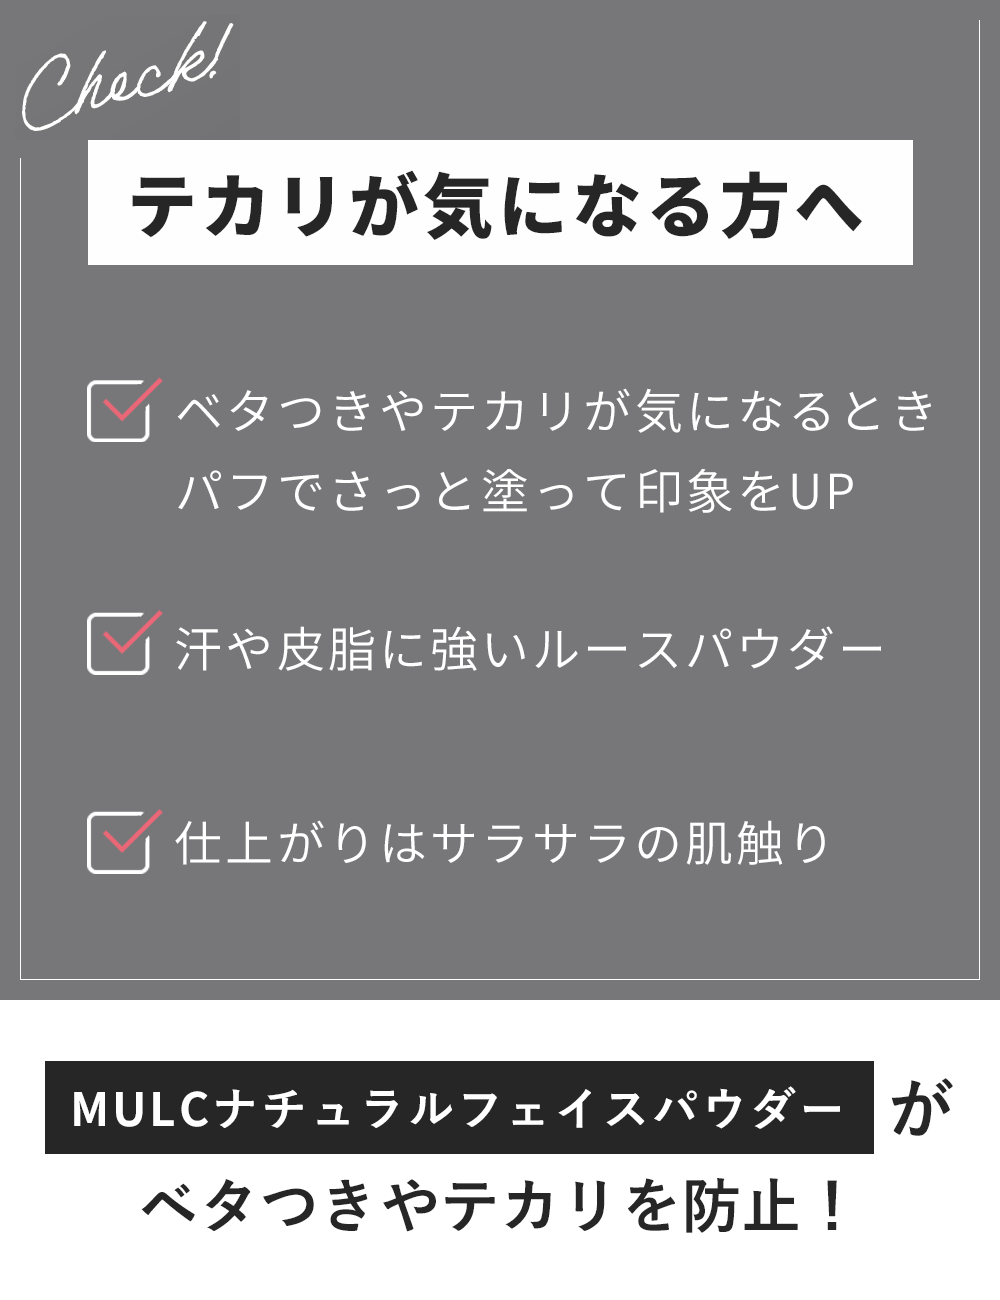 MULC ナチュラルフェイスパウダー - MULCオンラインショップ